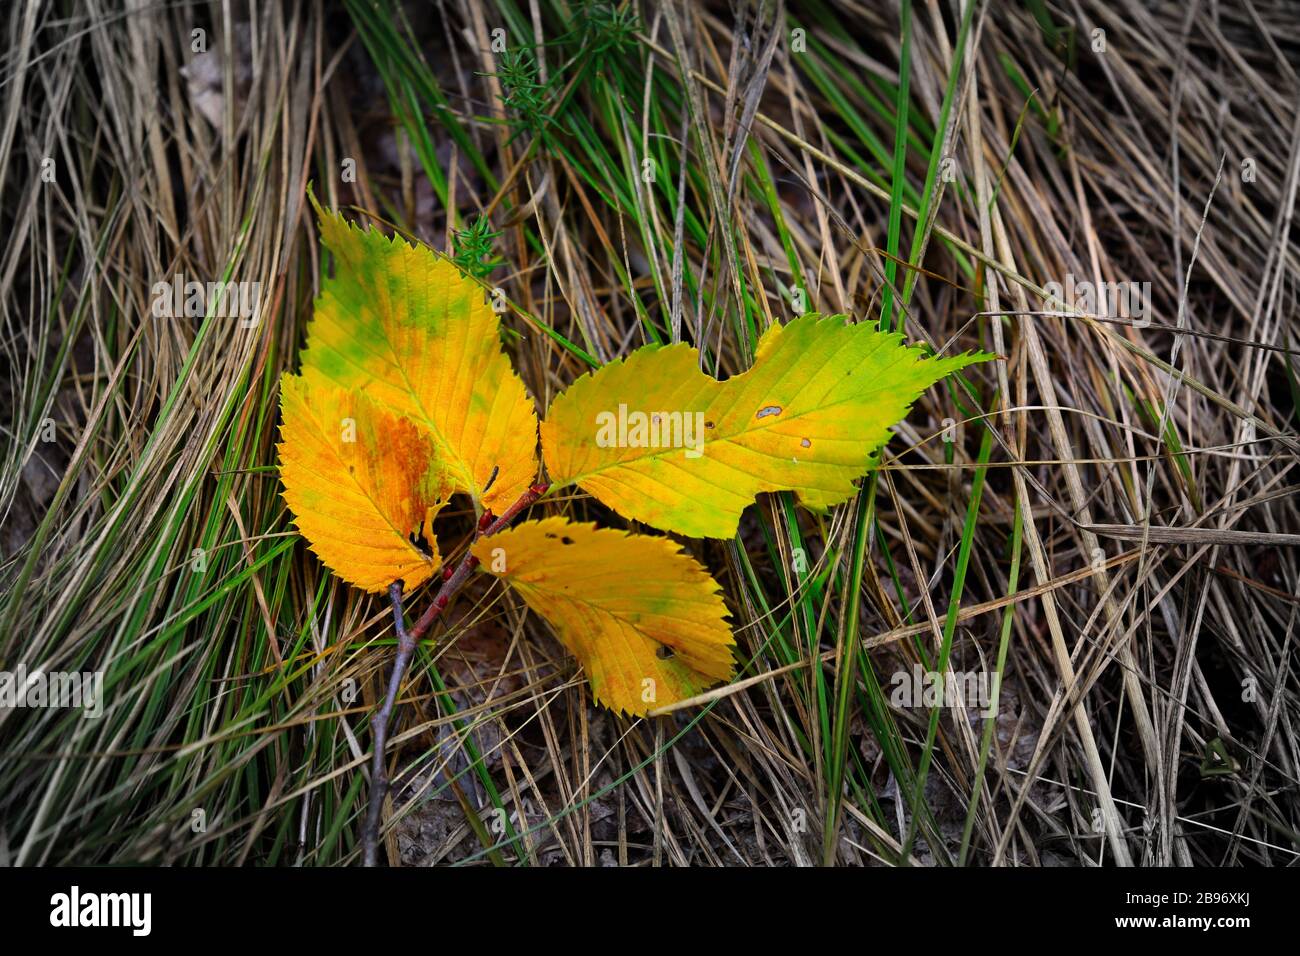 Nice abstract autumn leafage on grass Stock Photo